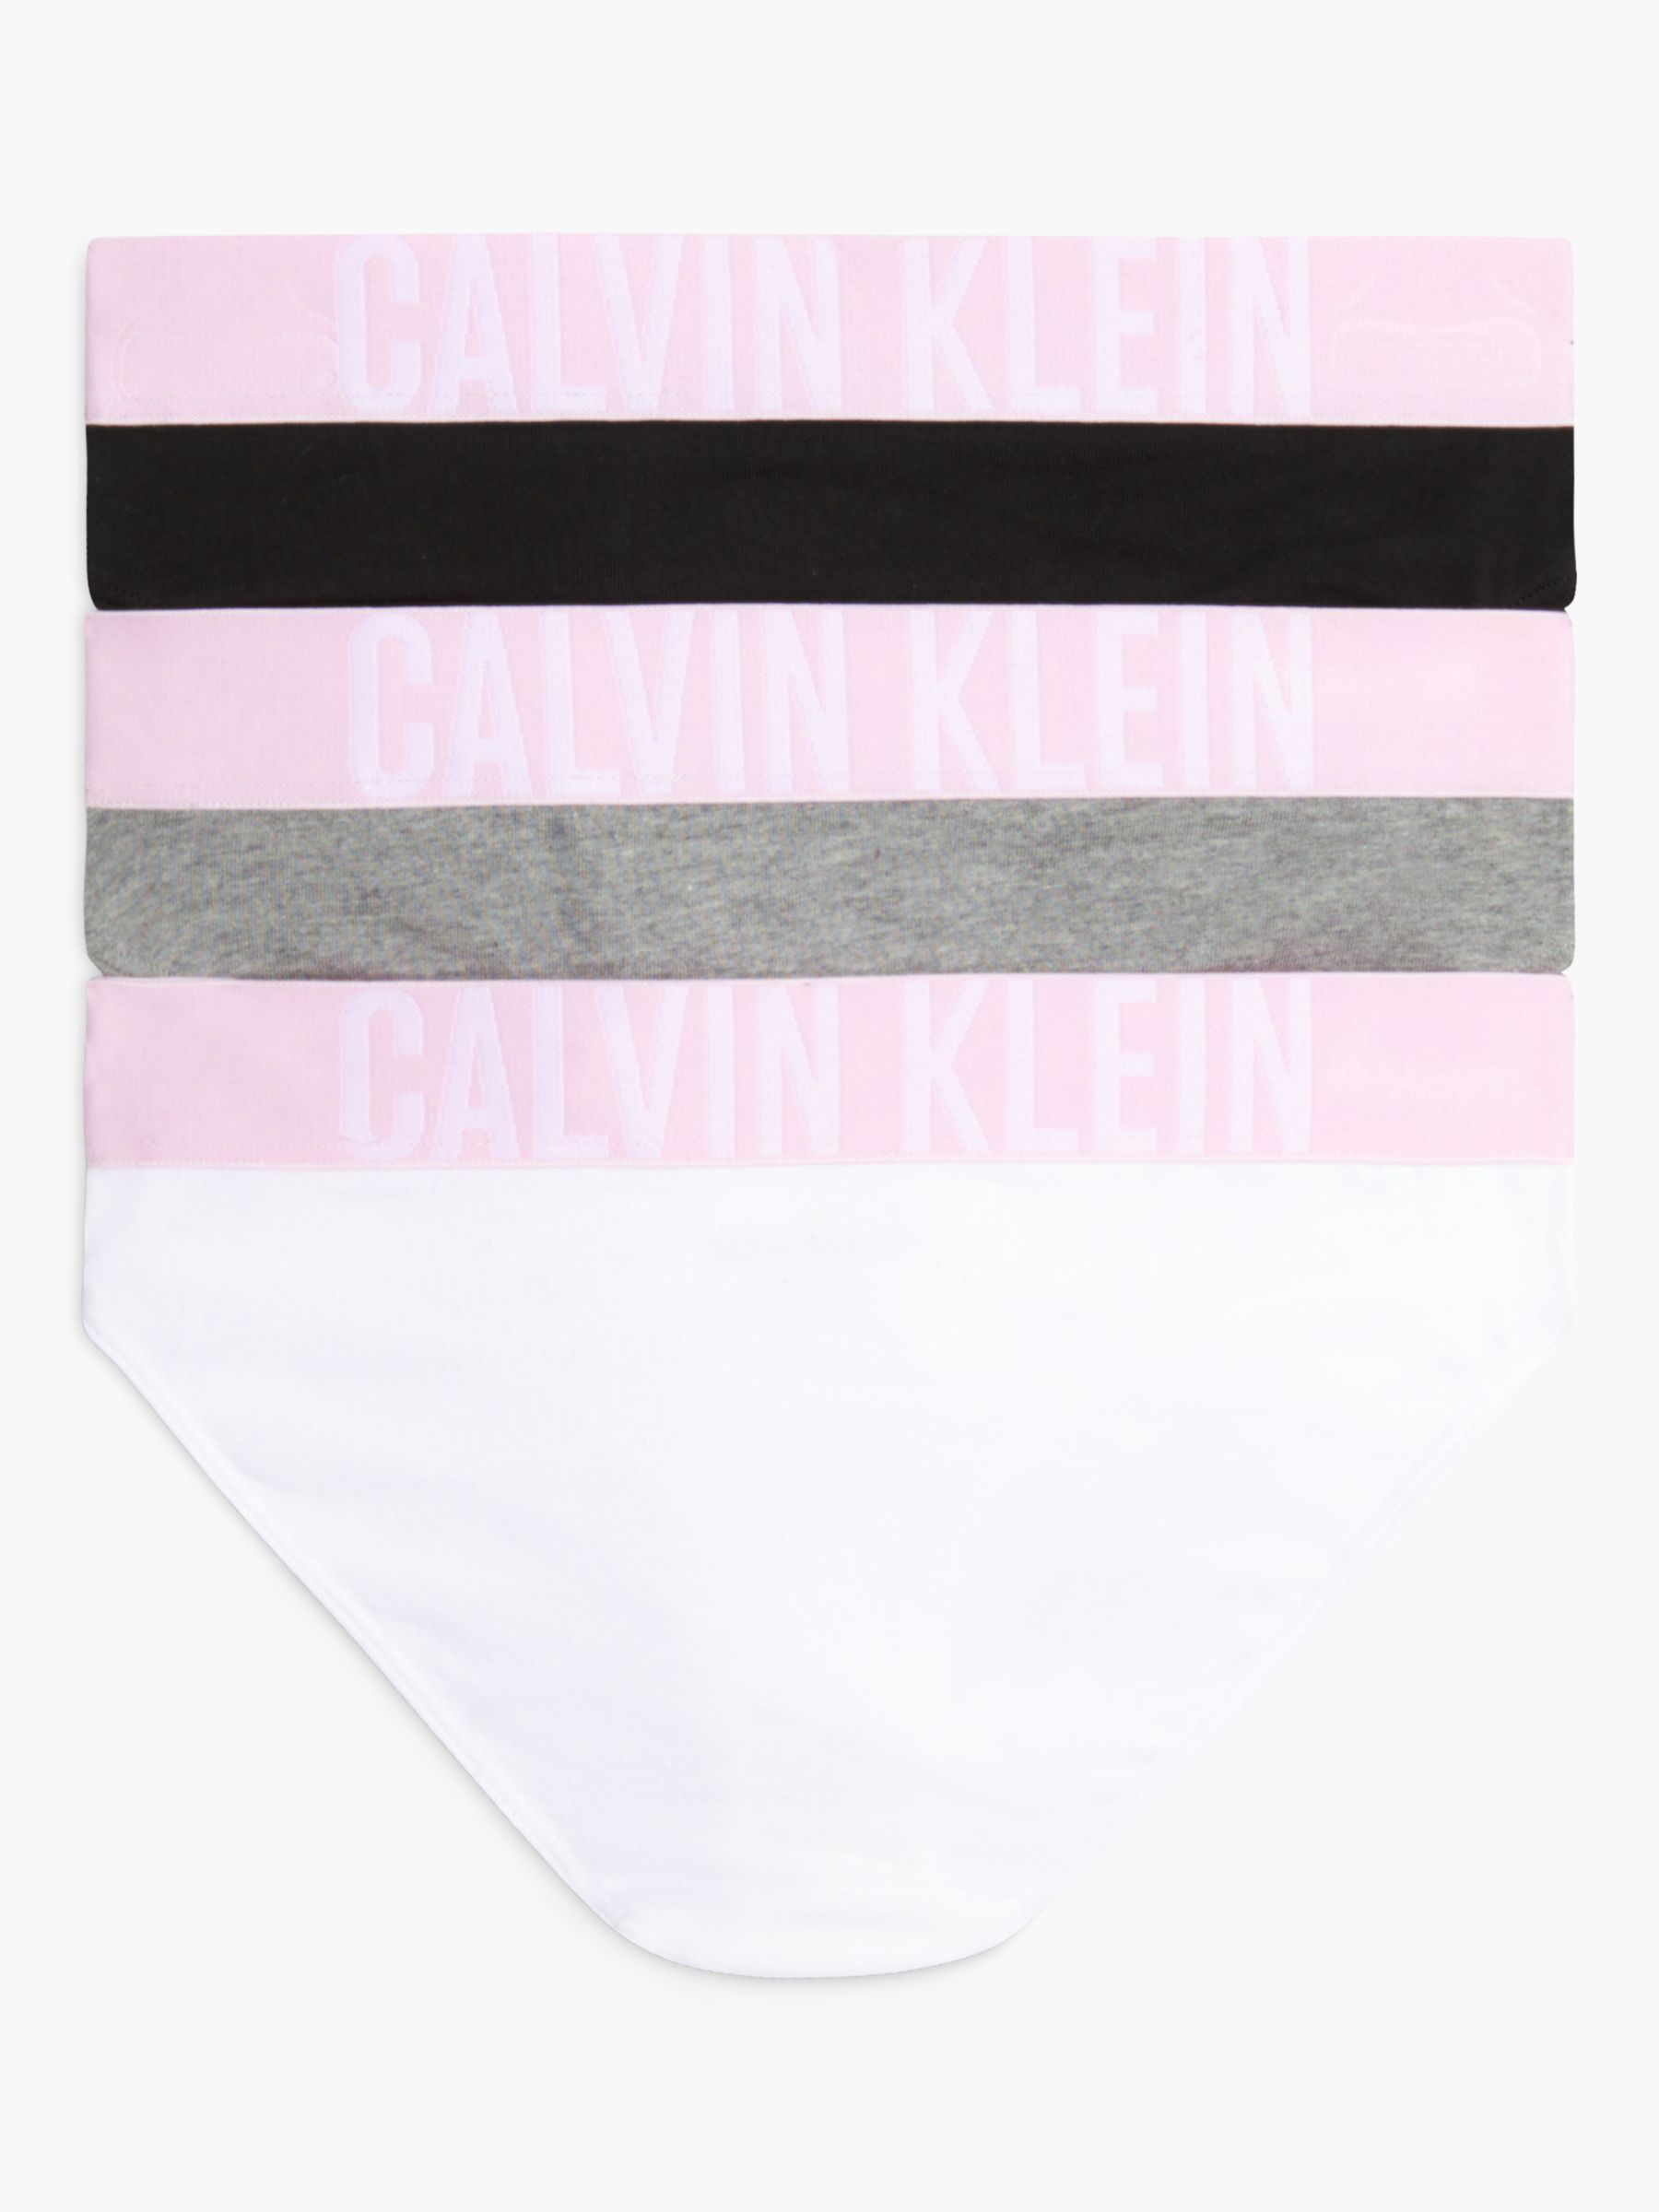 Vintage 2001 Calvin Klein Underwear Lingerie LARGE Newspaper Print Ad